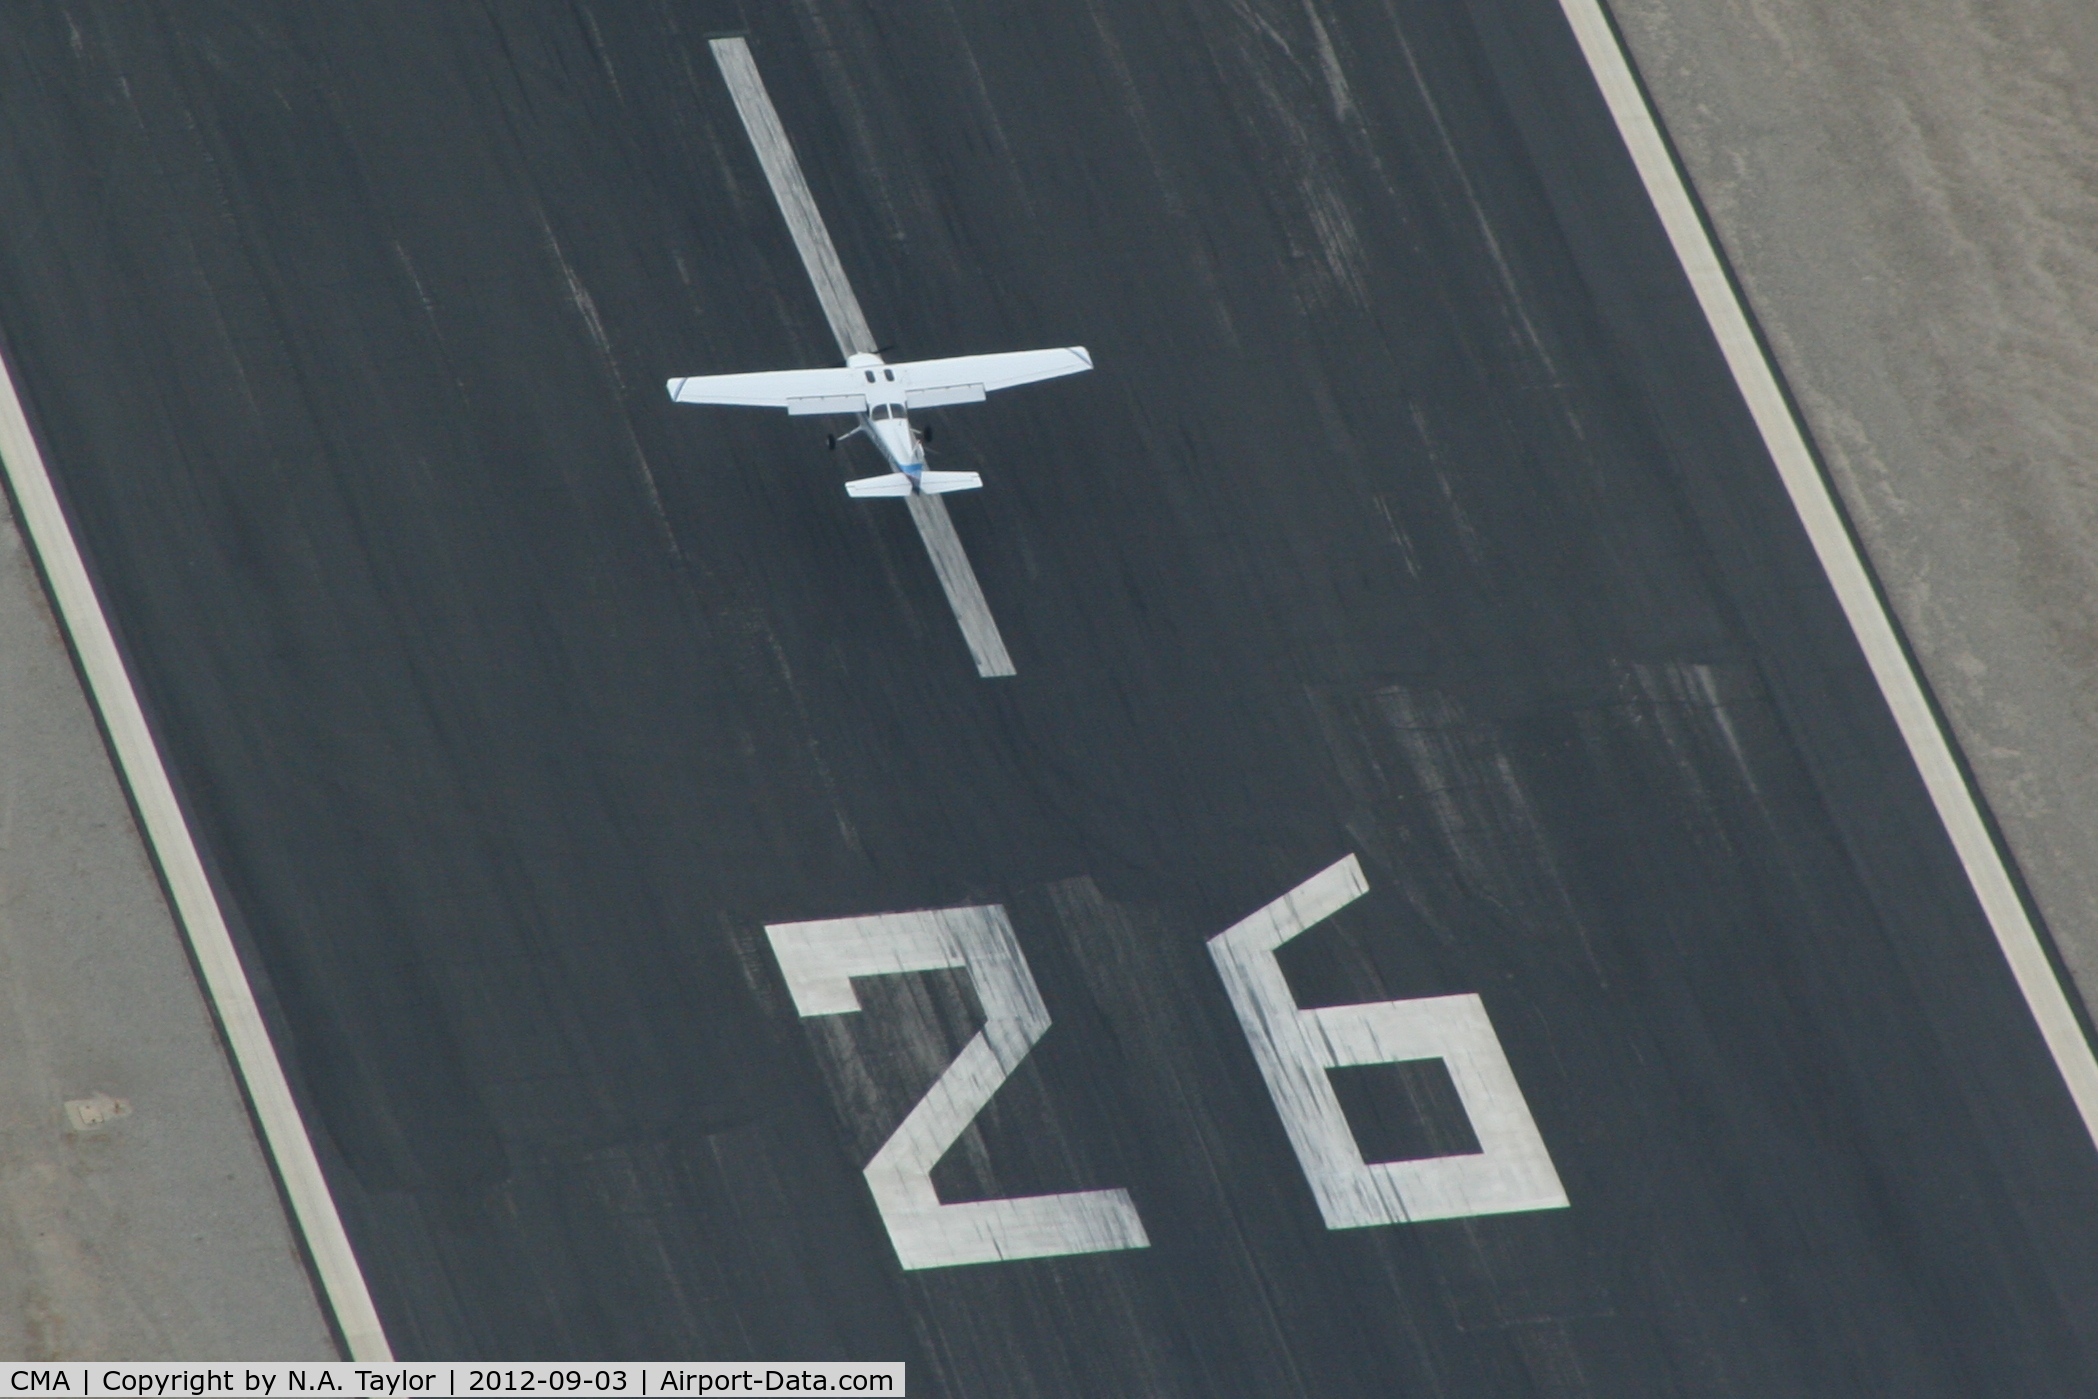 Camarillo Airport (CMA) - CIA Cessna touching down on RWY 26